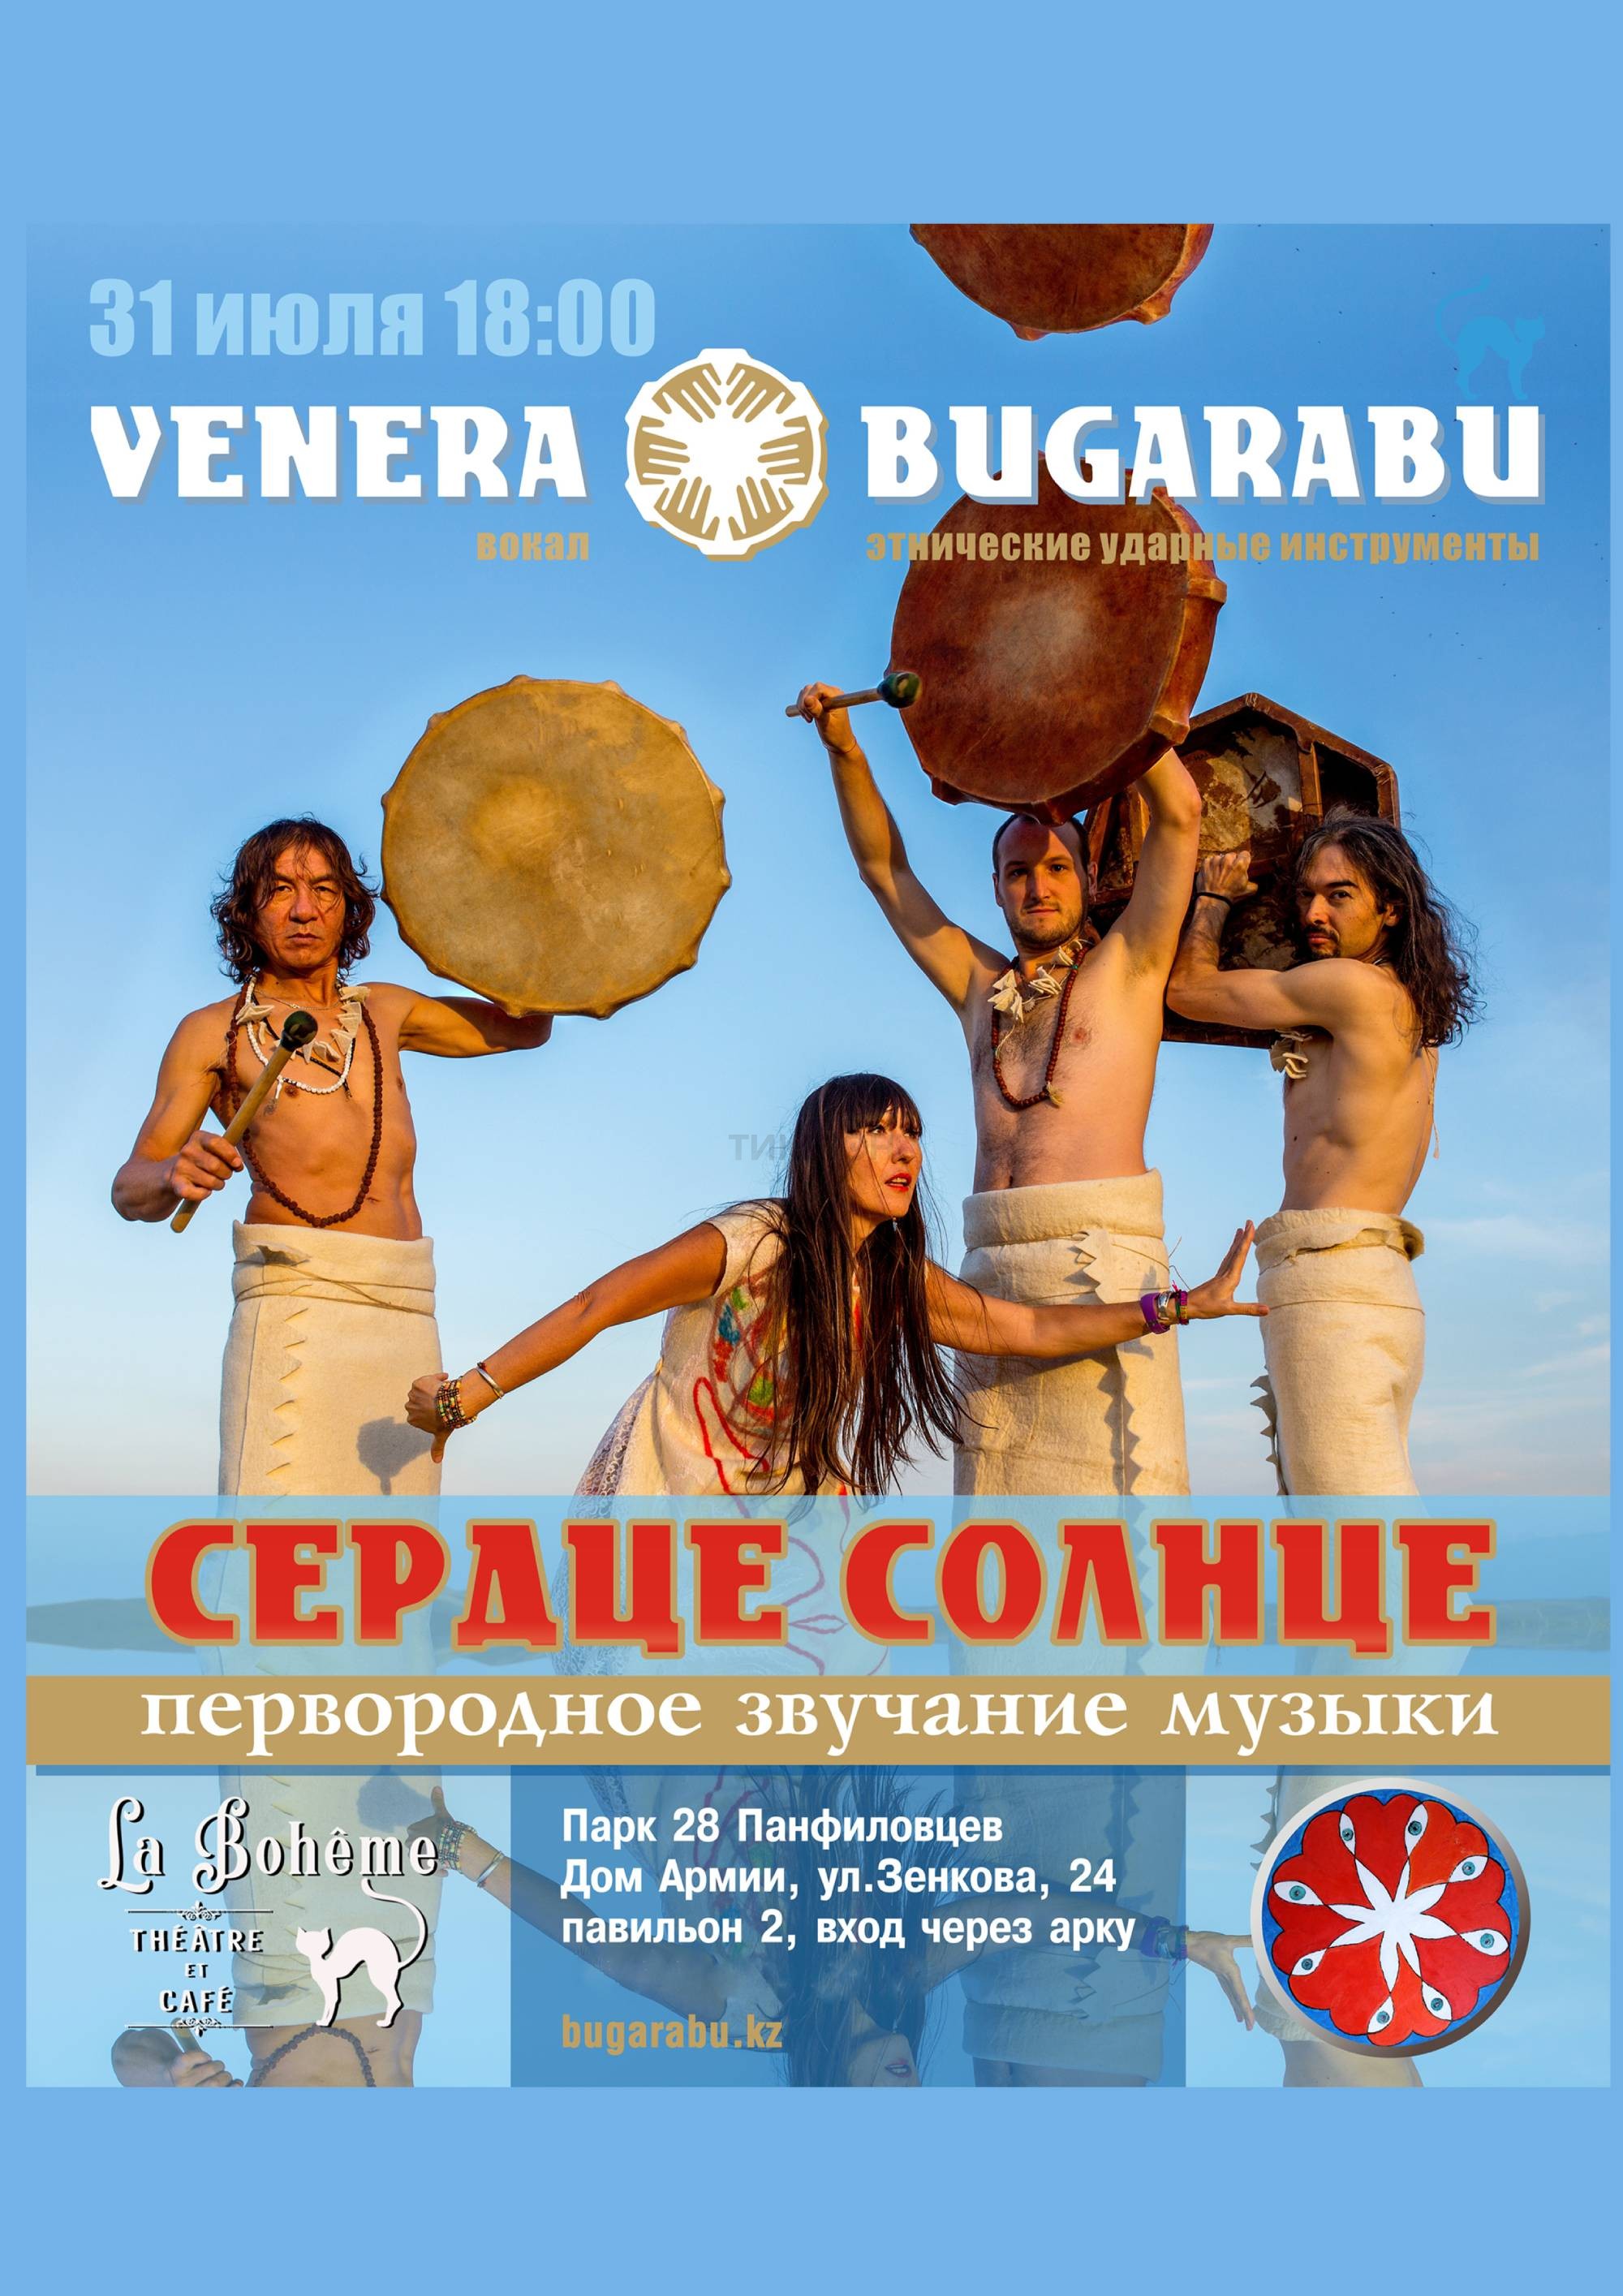 Группа Bugarabu